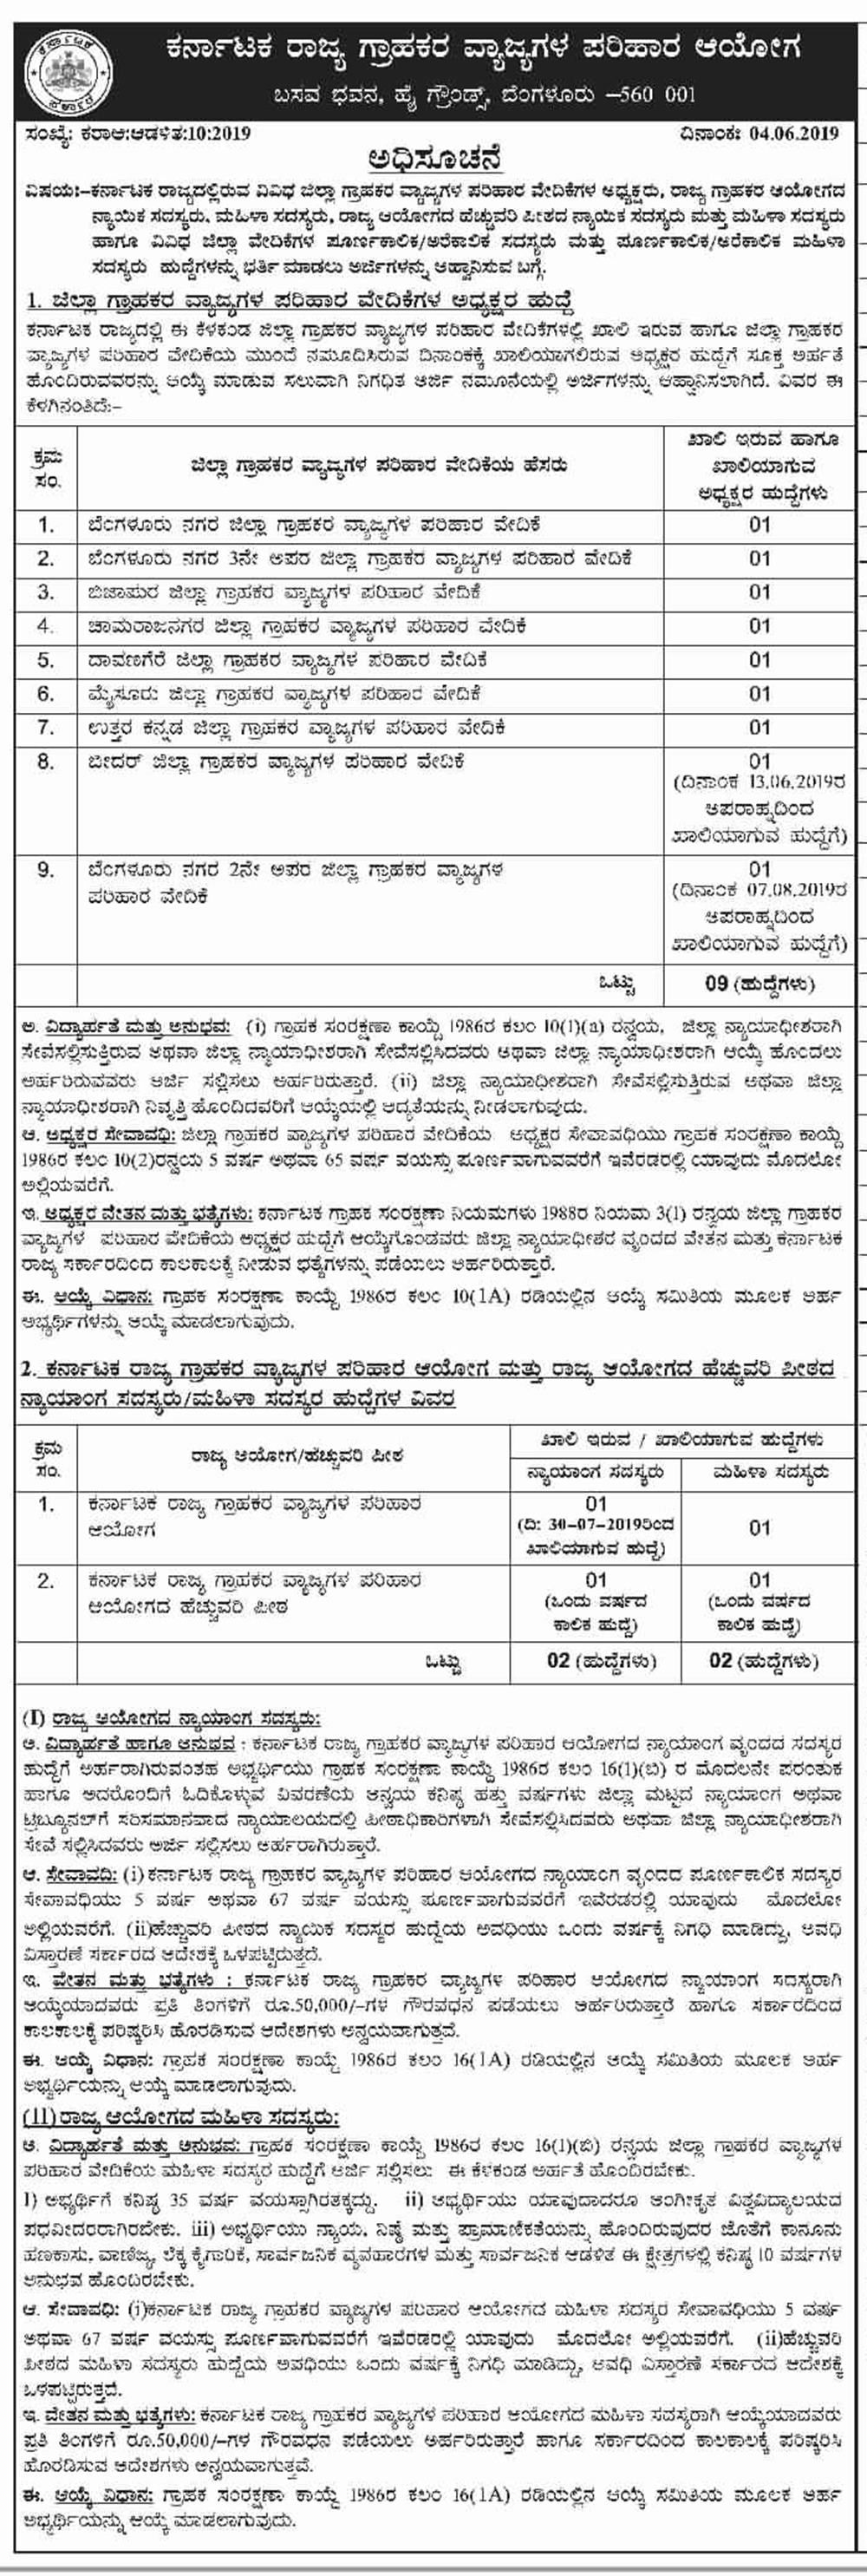 Karnataka State Consumer Commission Recruitment 2019- Apply for 30 President, Member Posts, Read Kannada Notification Here 2